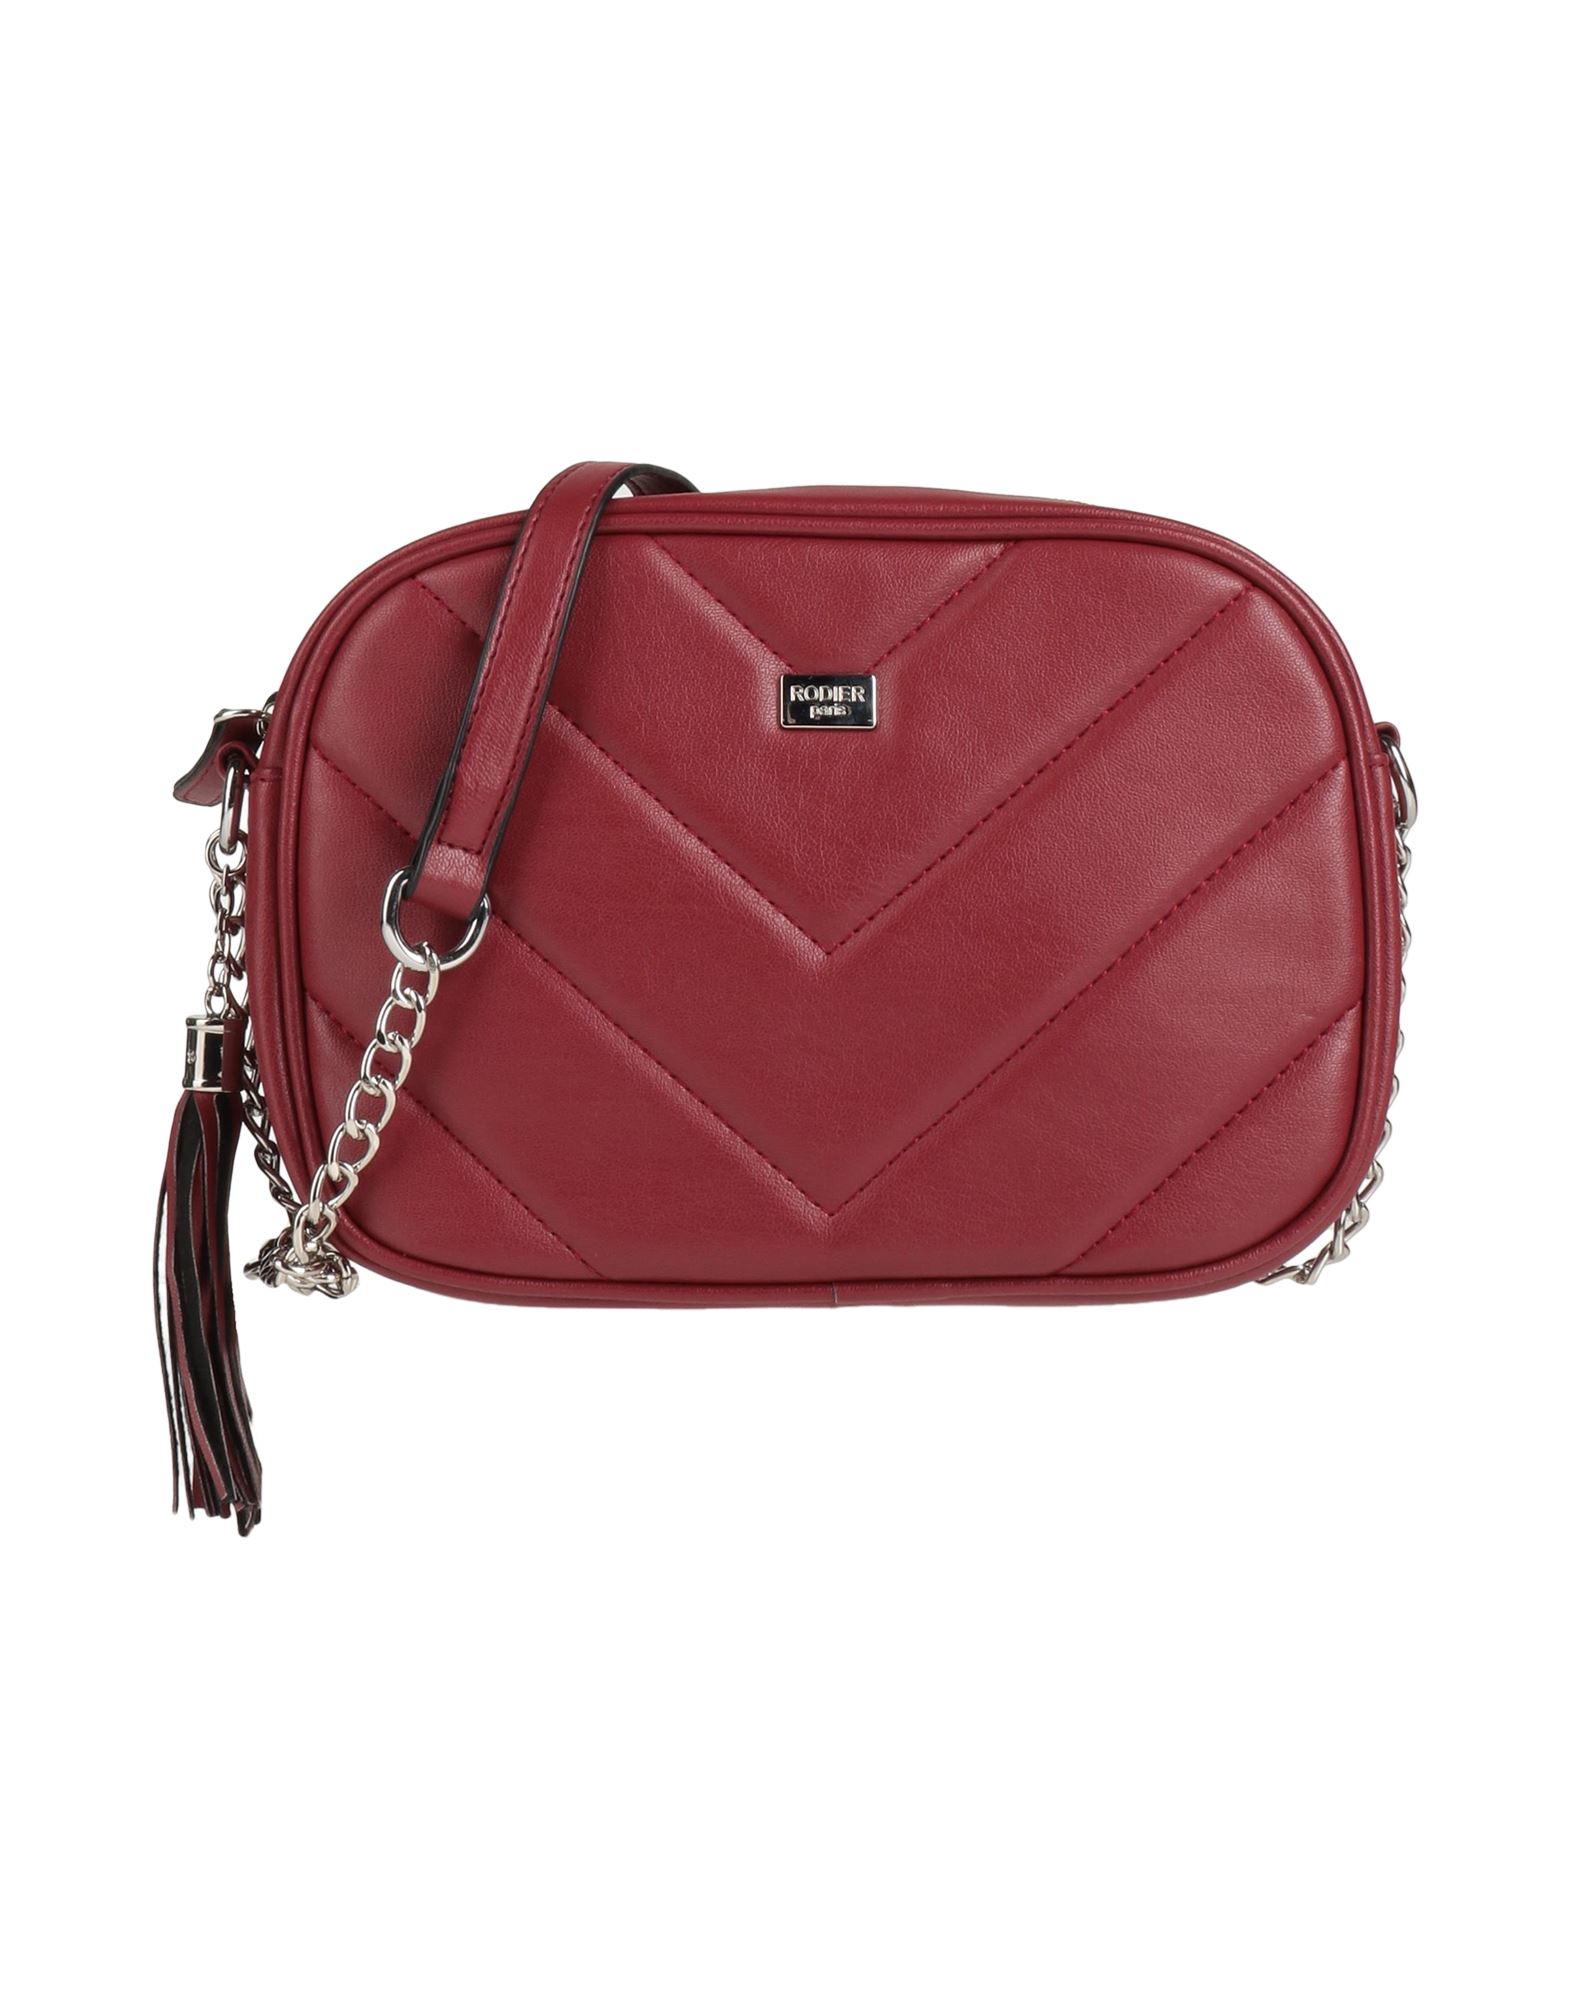 Rodier Handbags In Brick Red